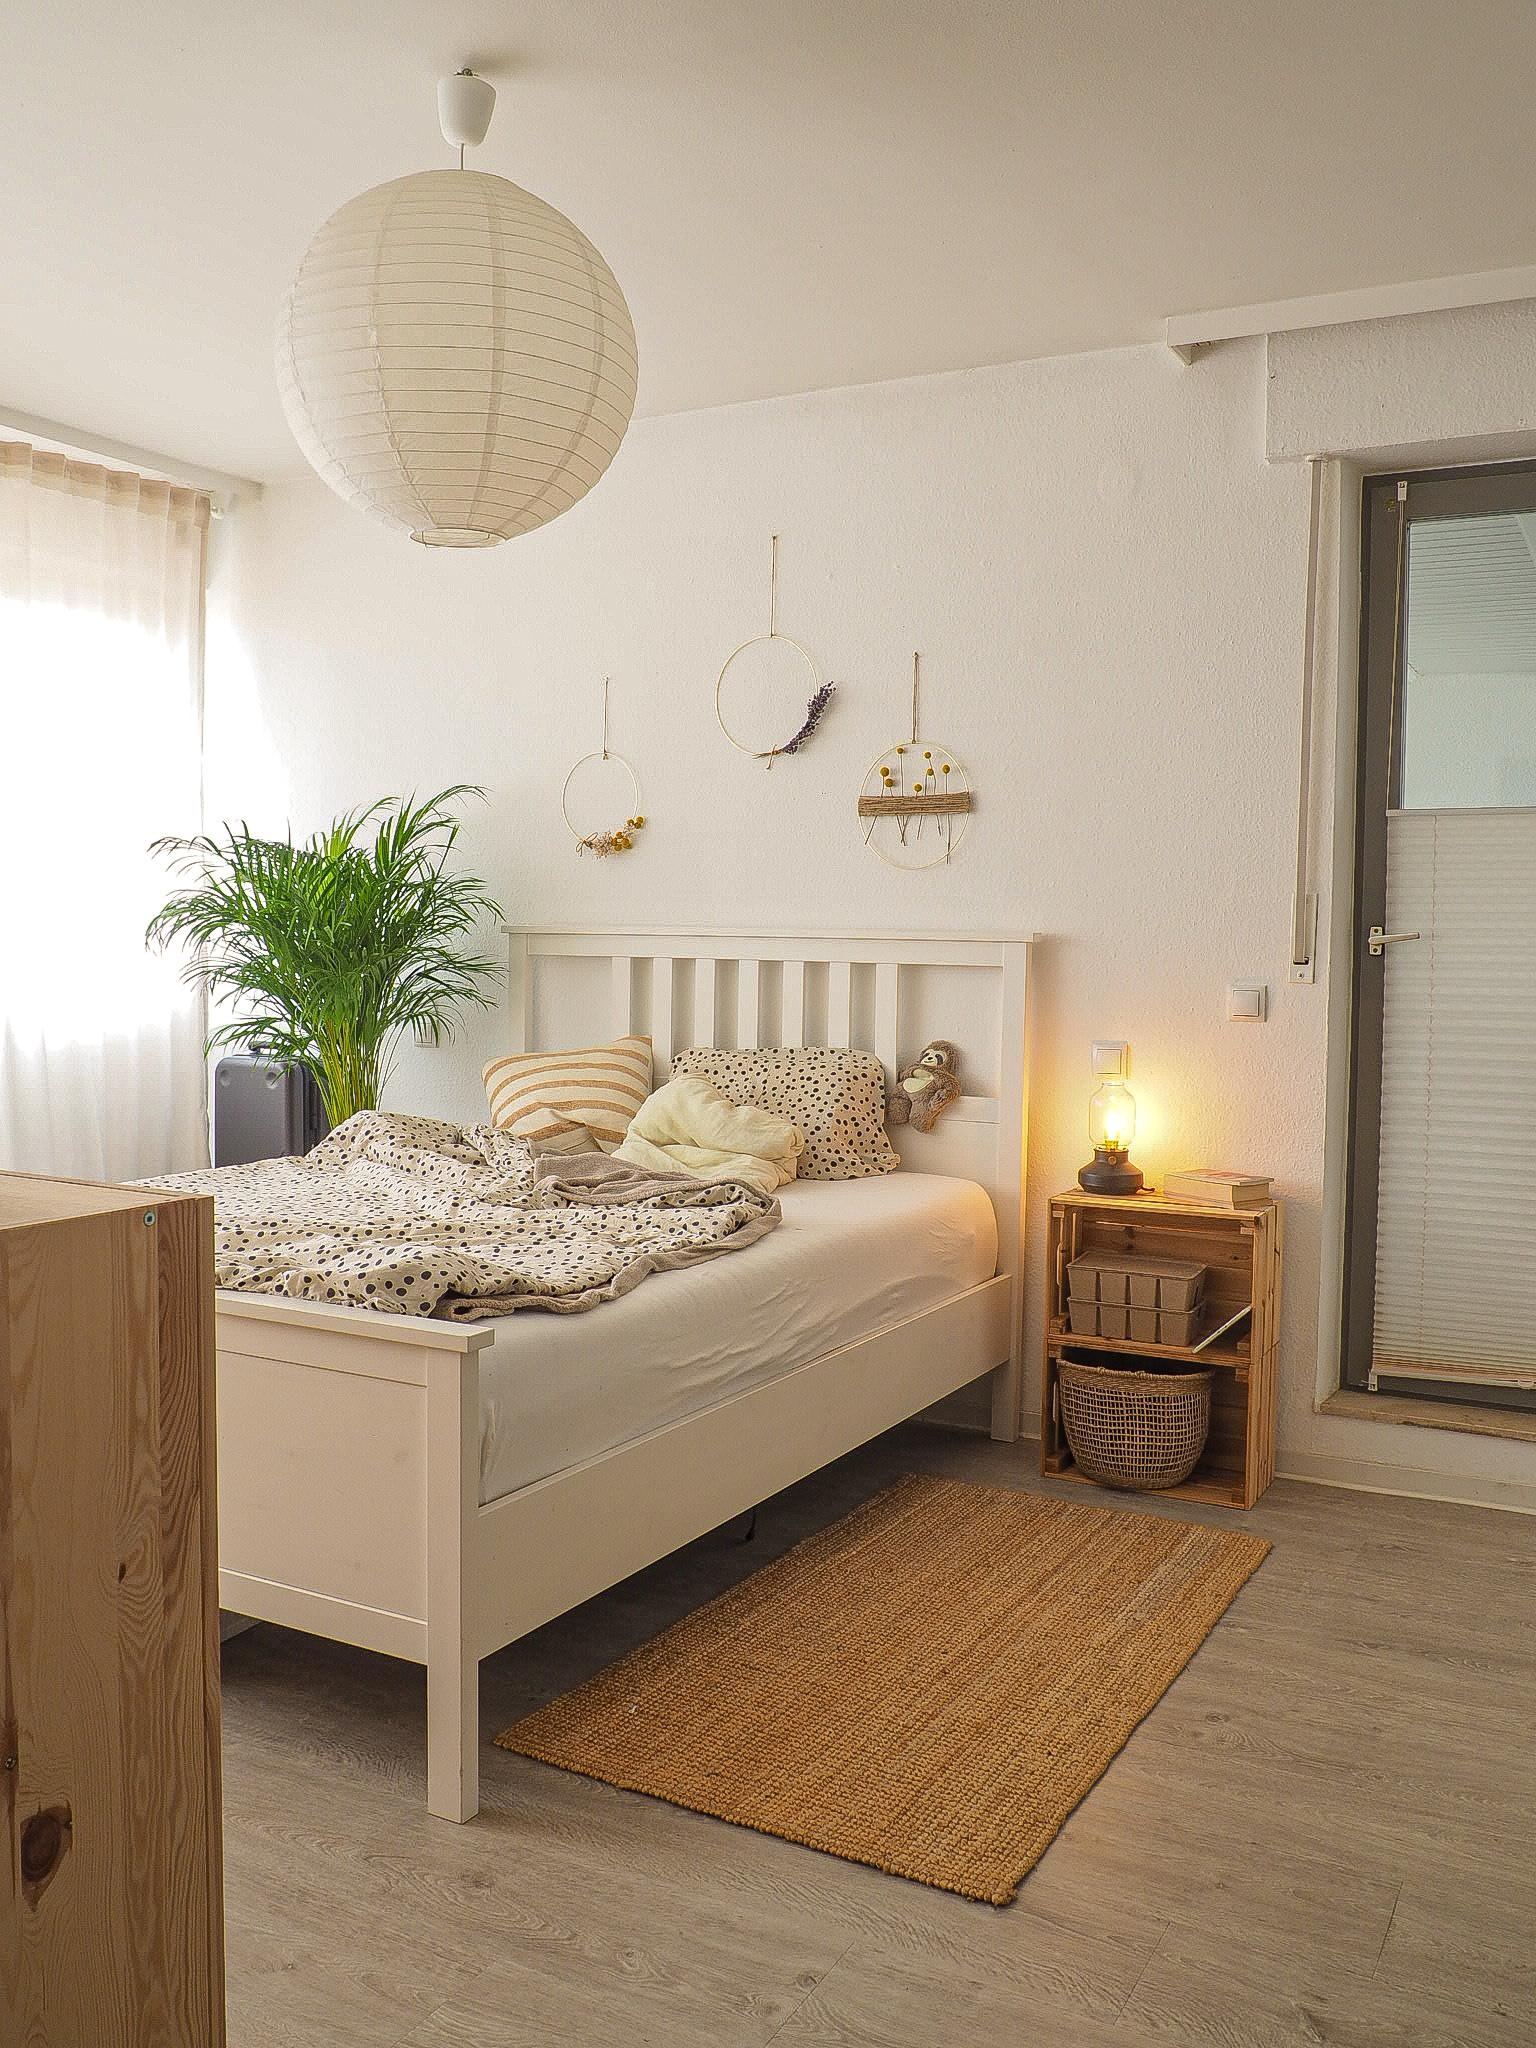 #bedroomstorys #bedroom #mybedroom #mitmachen #sweetdreams #schlafzimmerinspo #schlafzimmer 